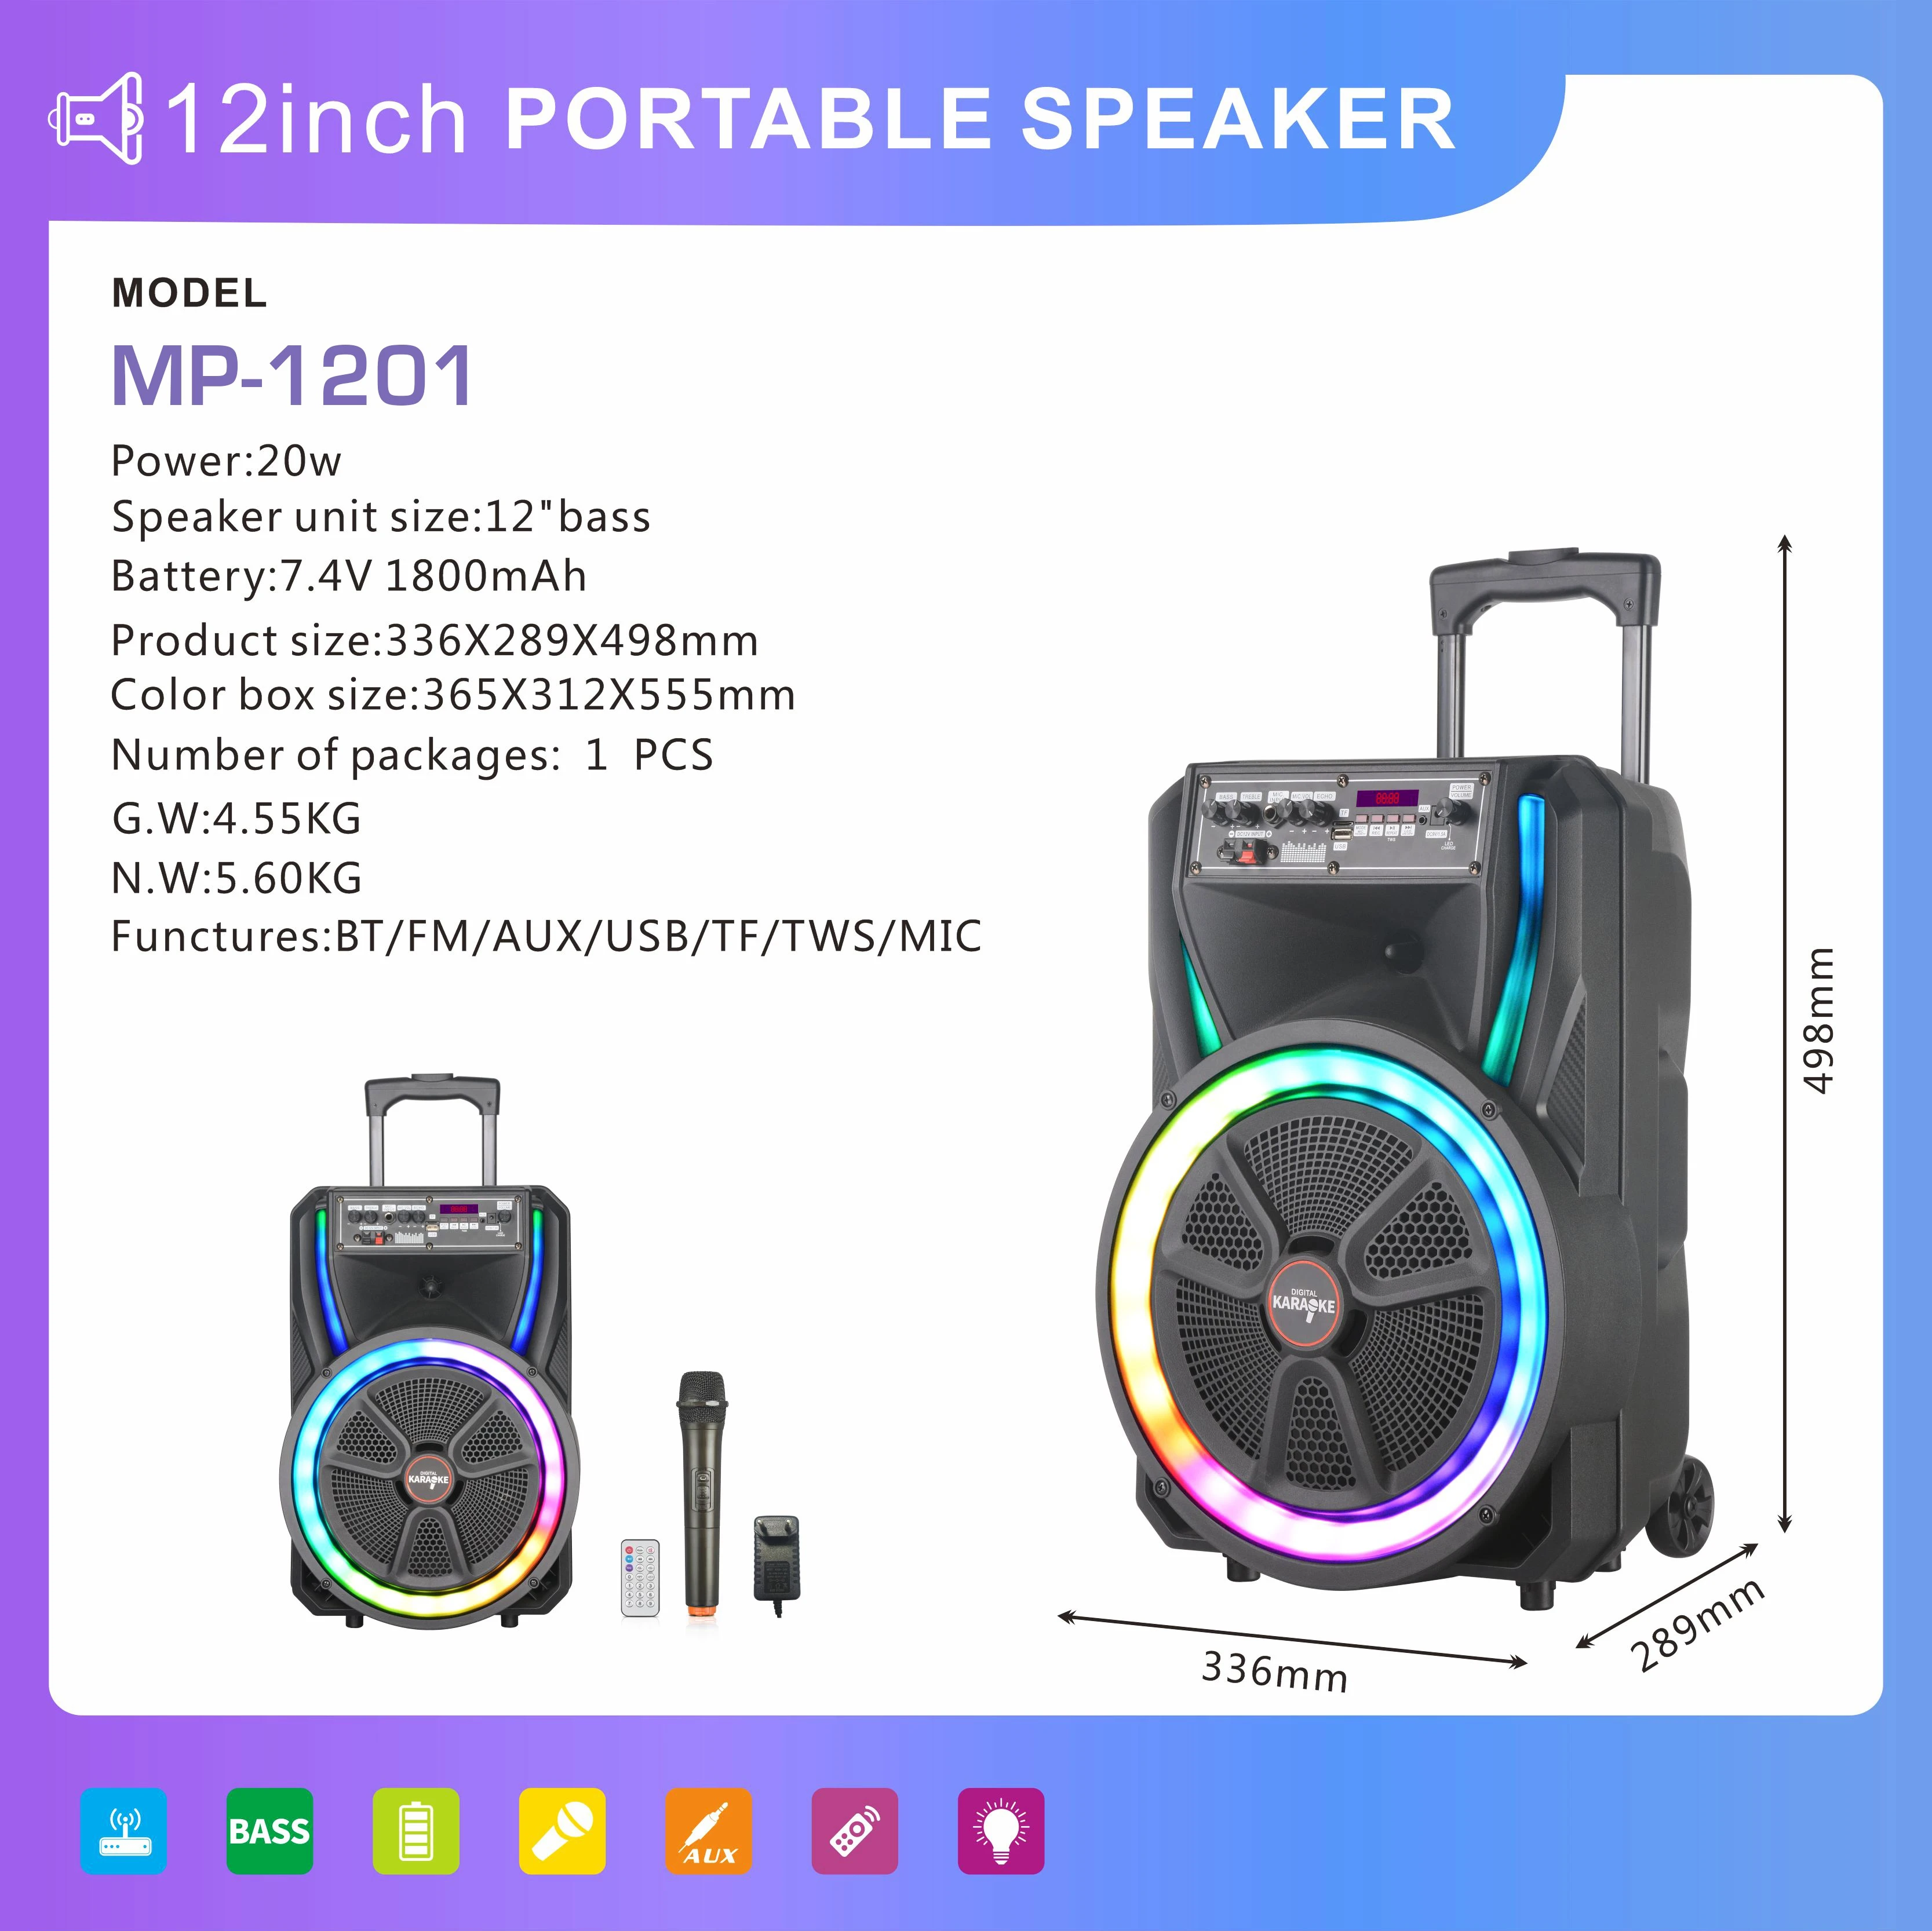 portable bluetooth speaker,bluetooth speakers for home,speakers bluetooth wireless